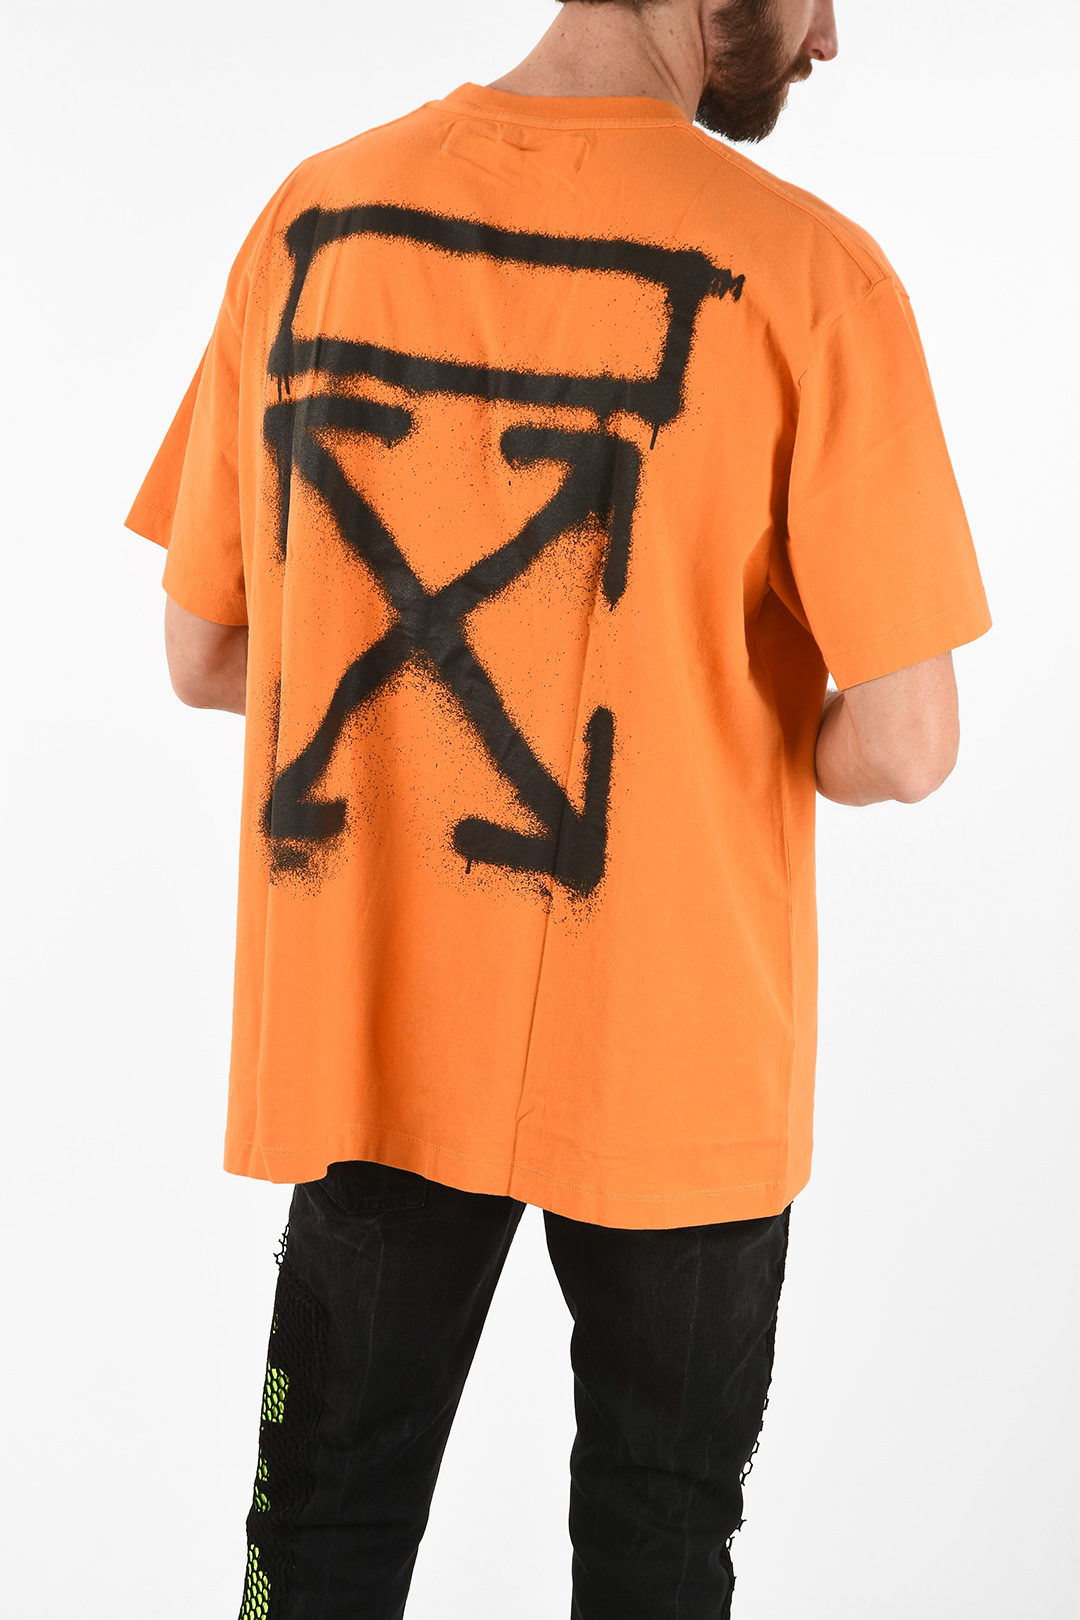 OFF-WHITE Spray Paint T-Shirt Orange